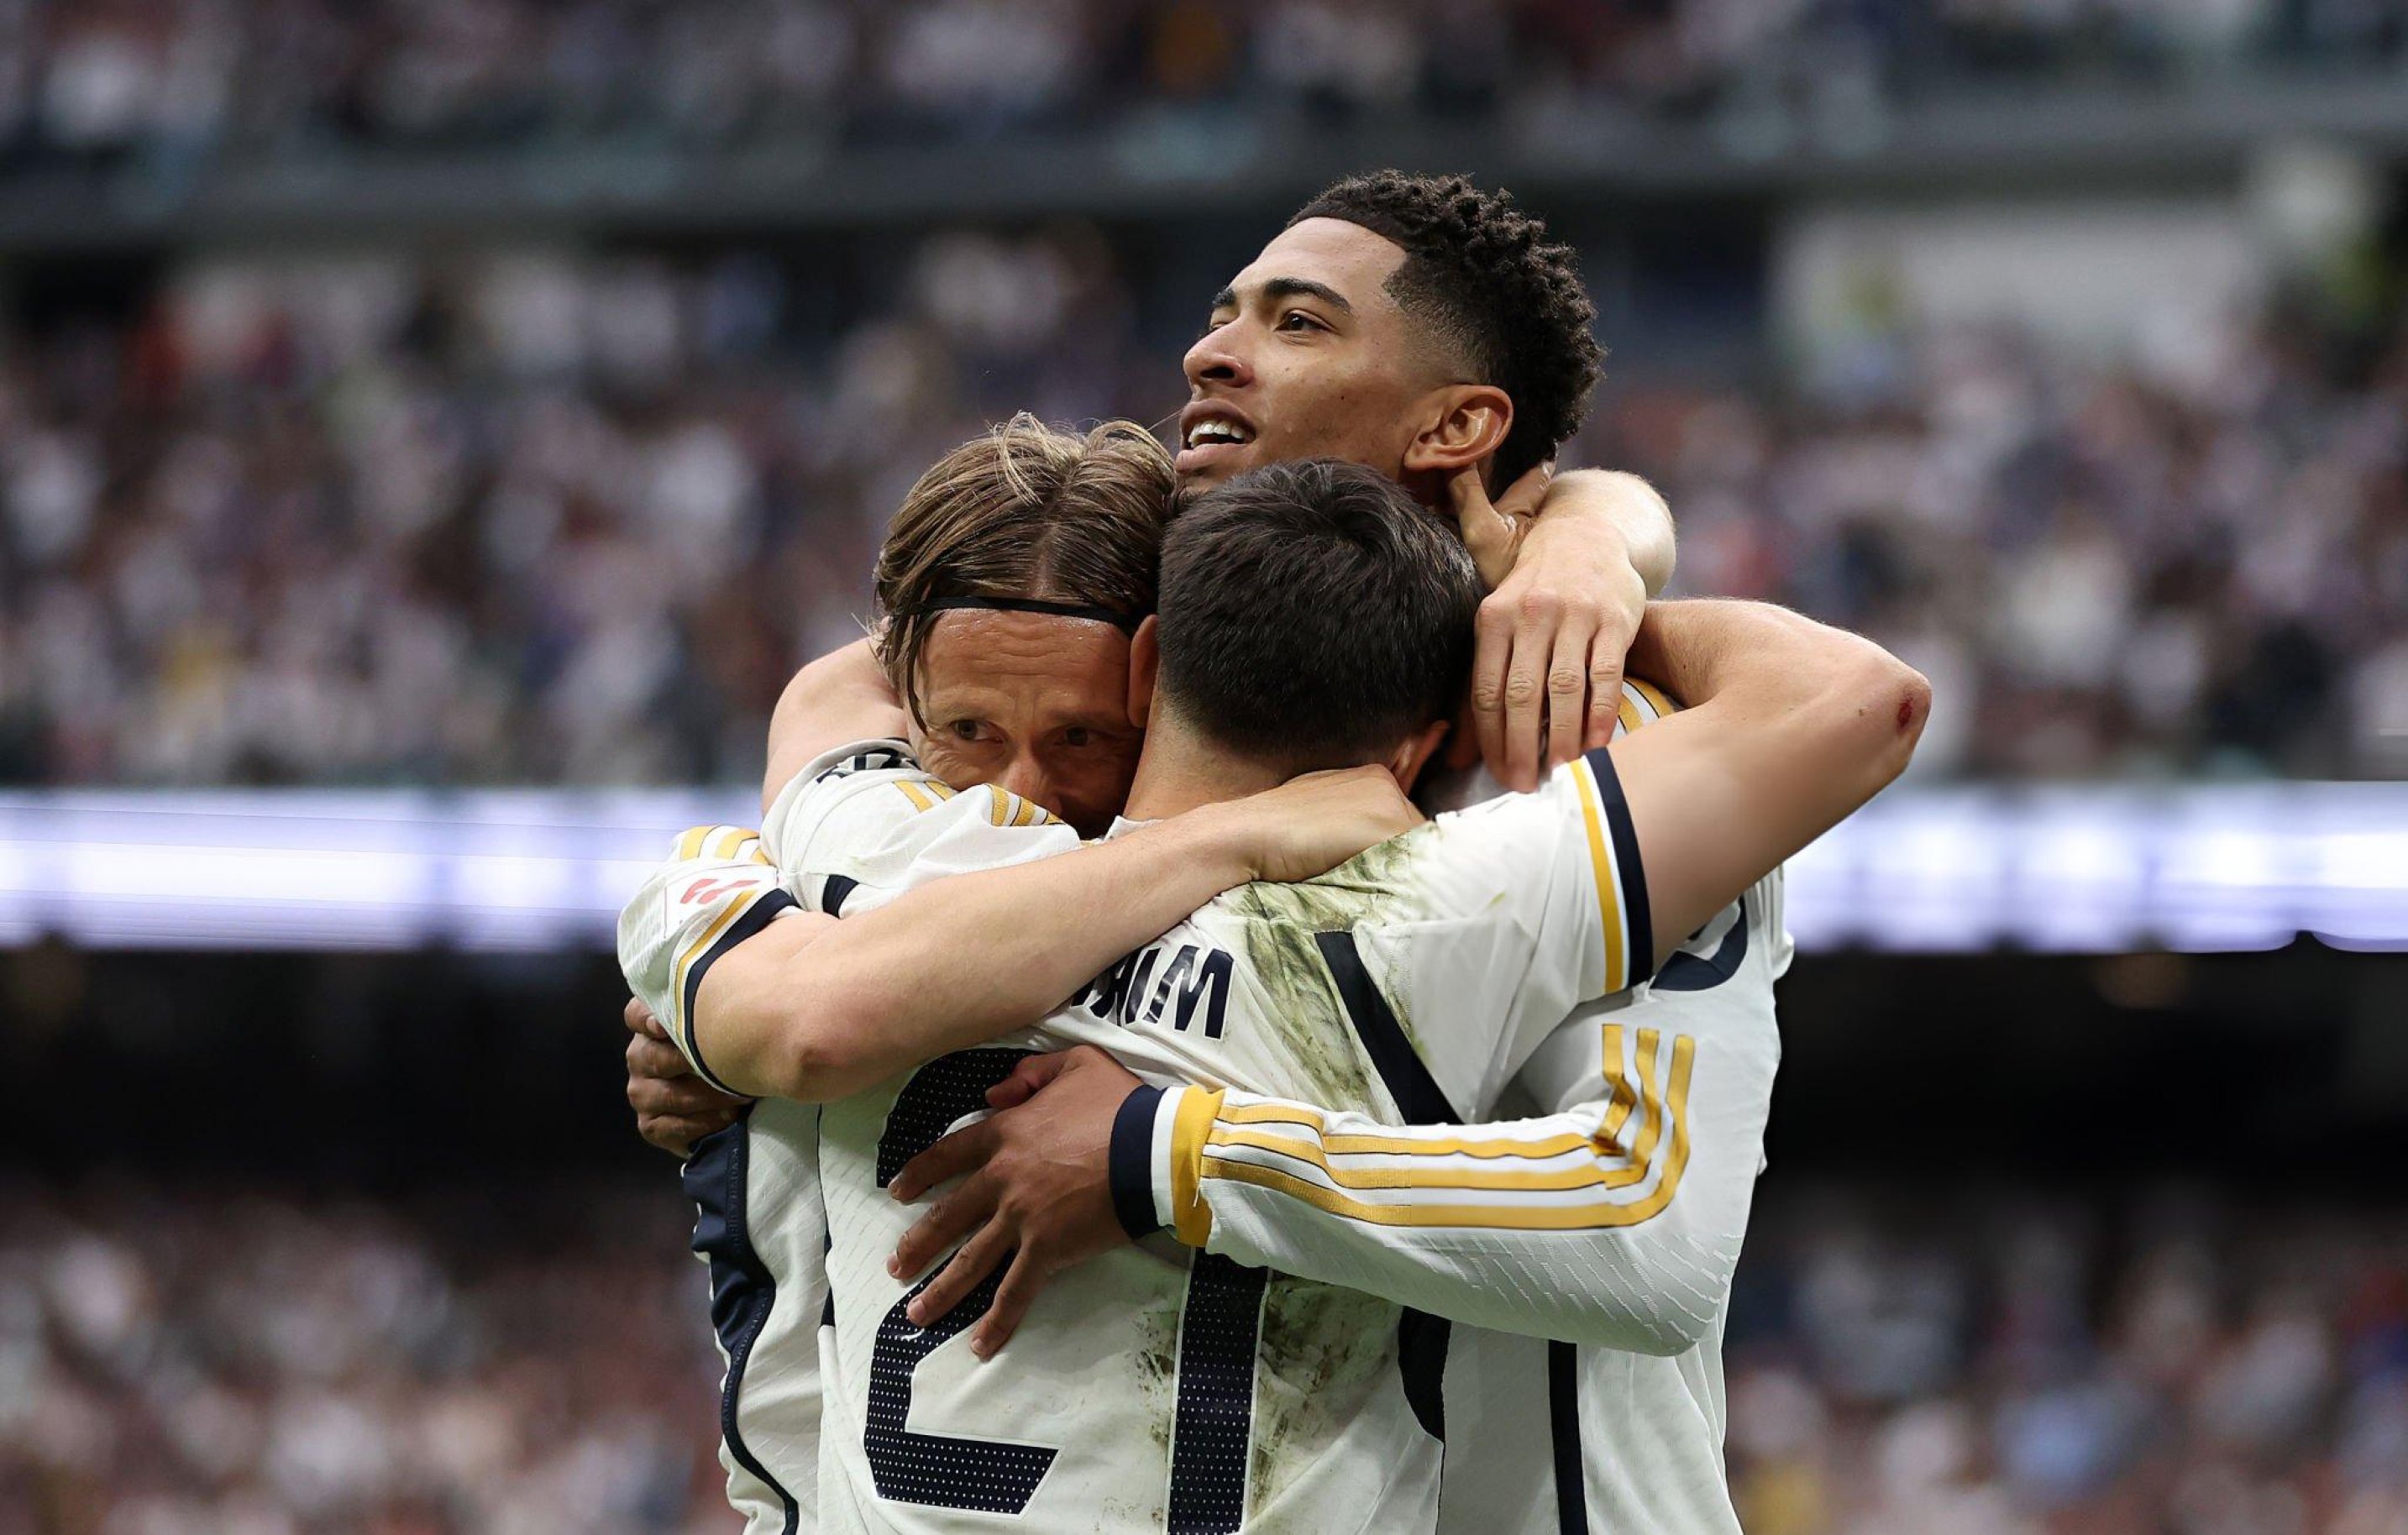 La Liga title edges ever closer for Real Madrid after comfortable victory over Cadiz